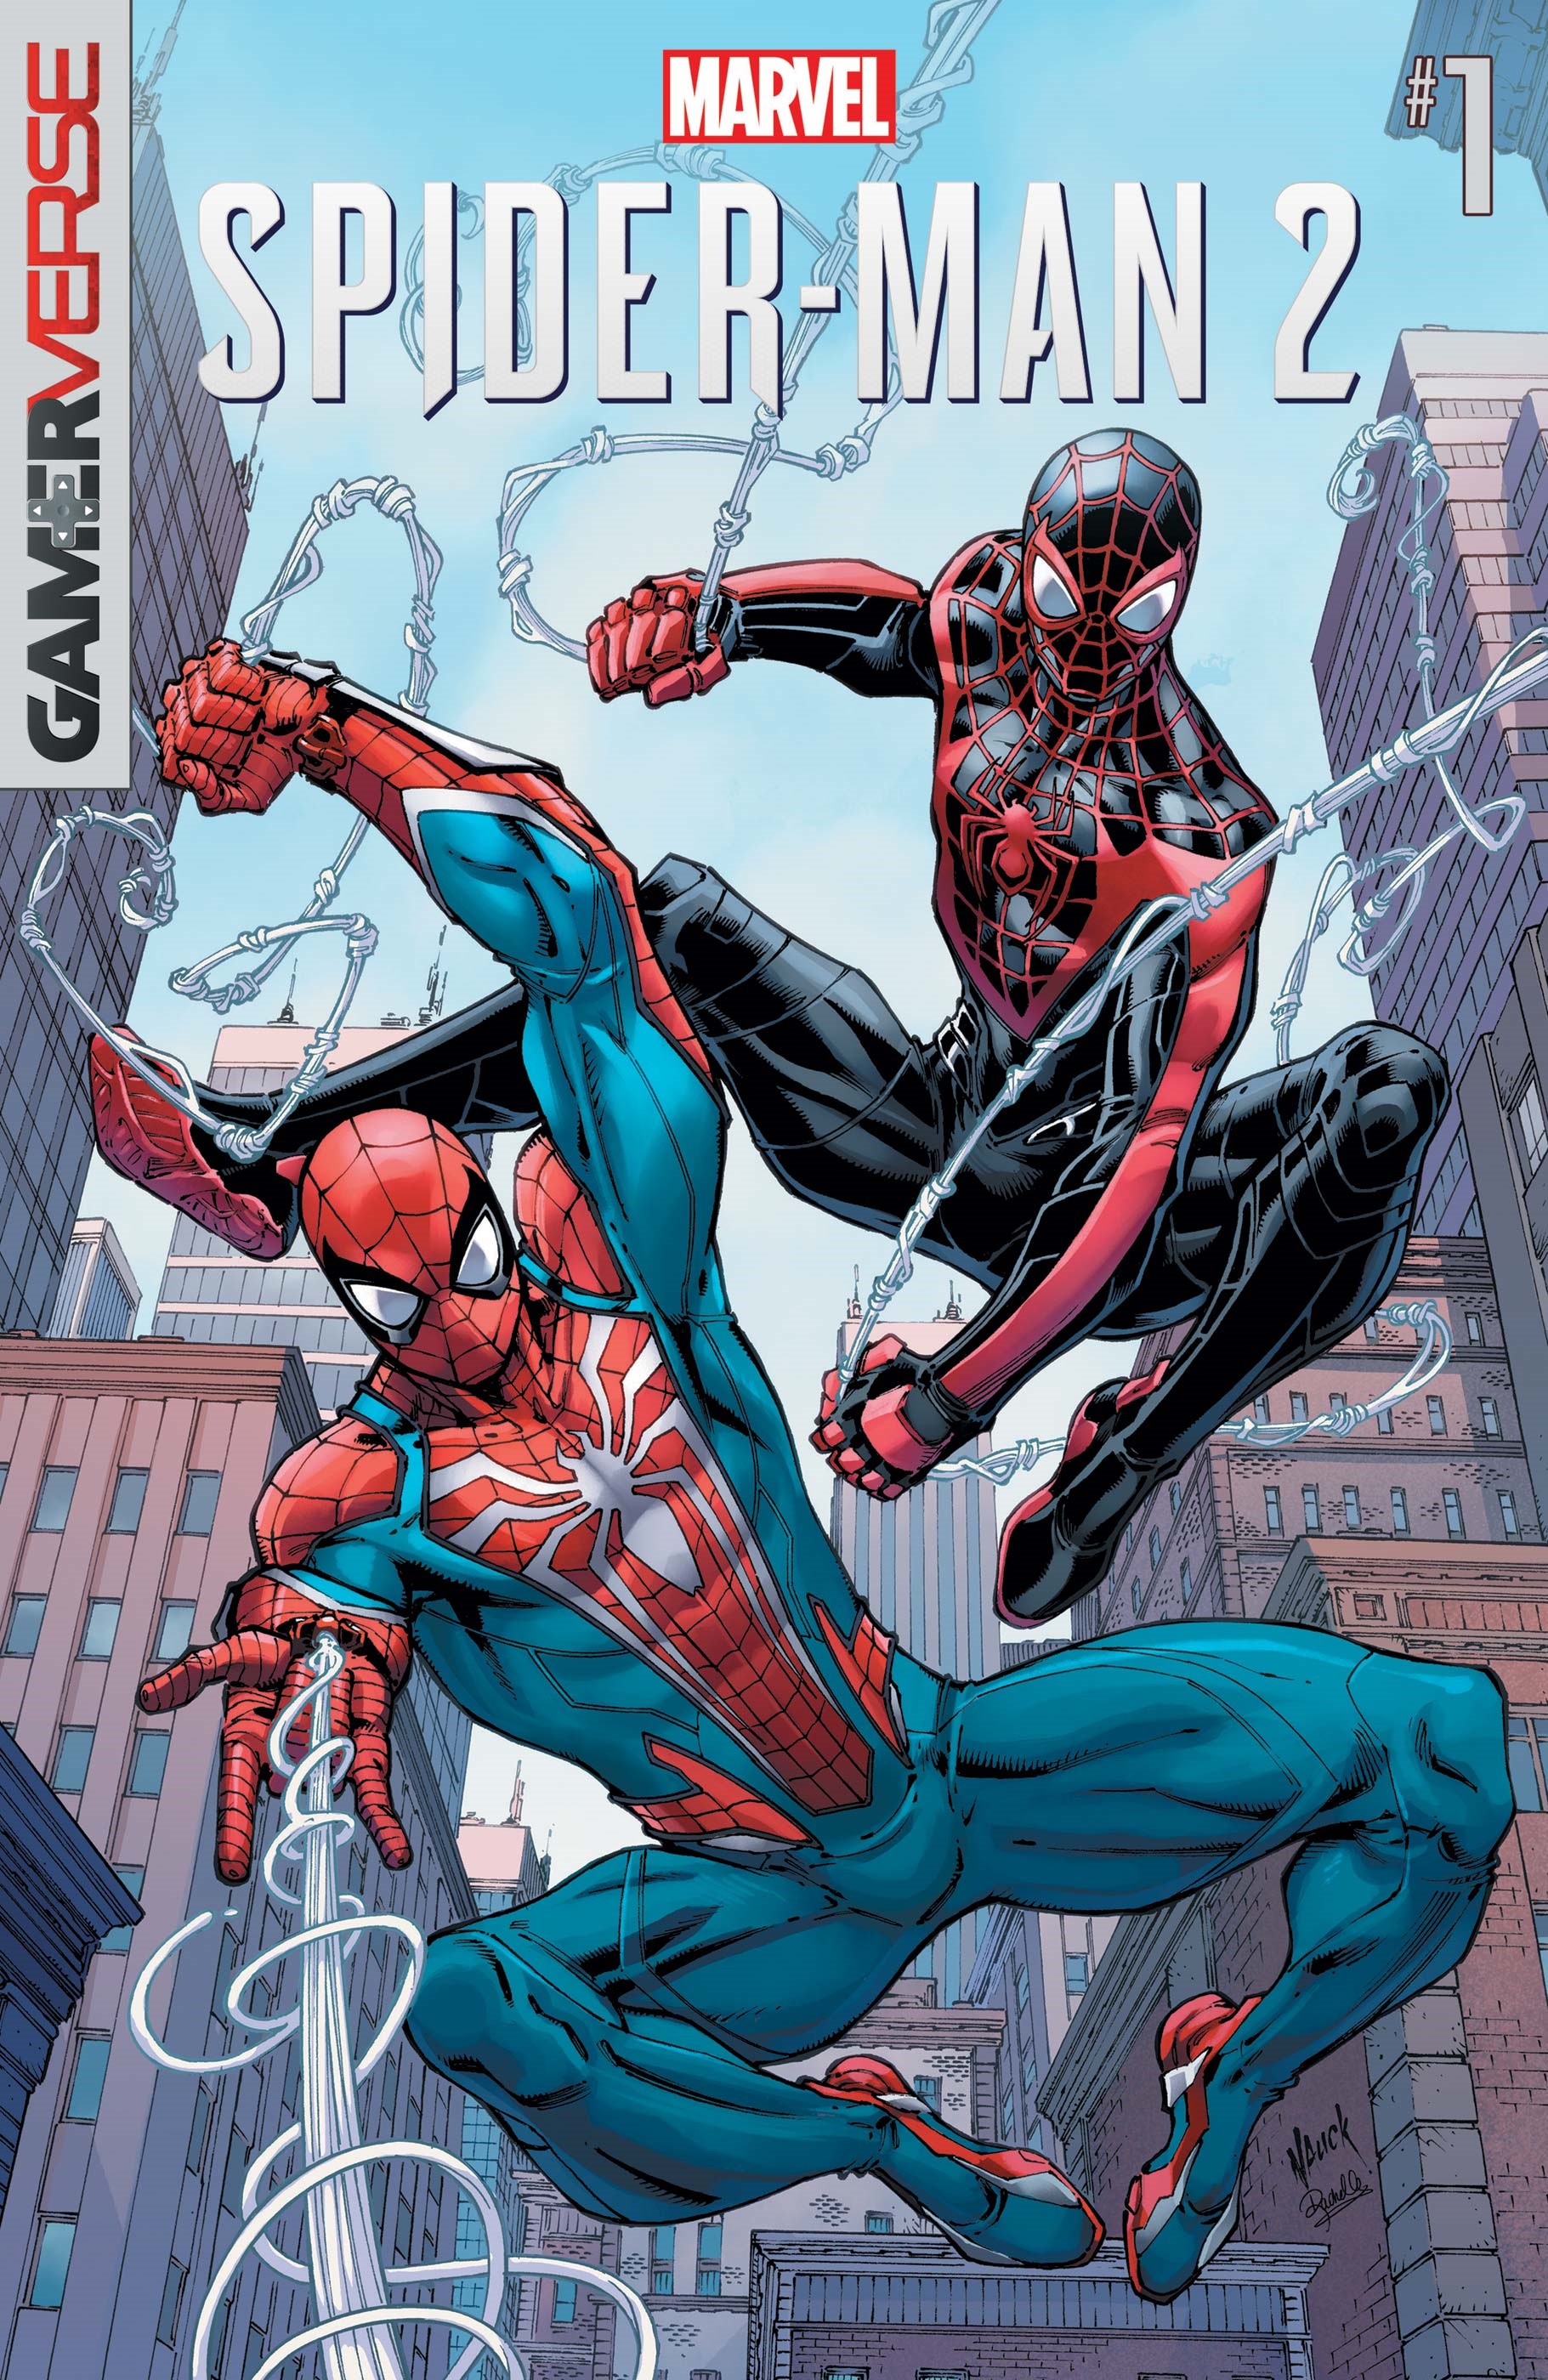 Marvel spider-man 2 comic